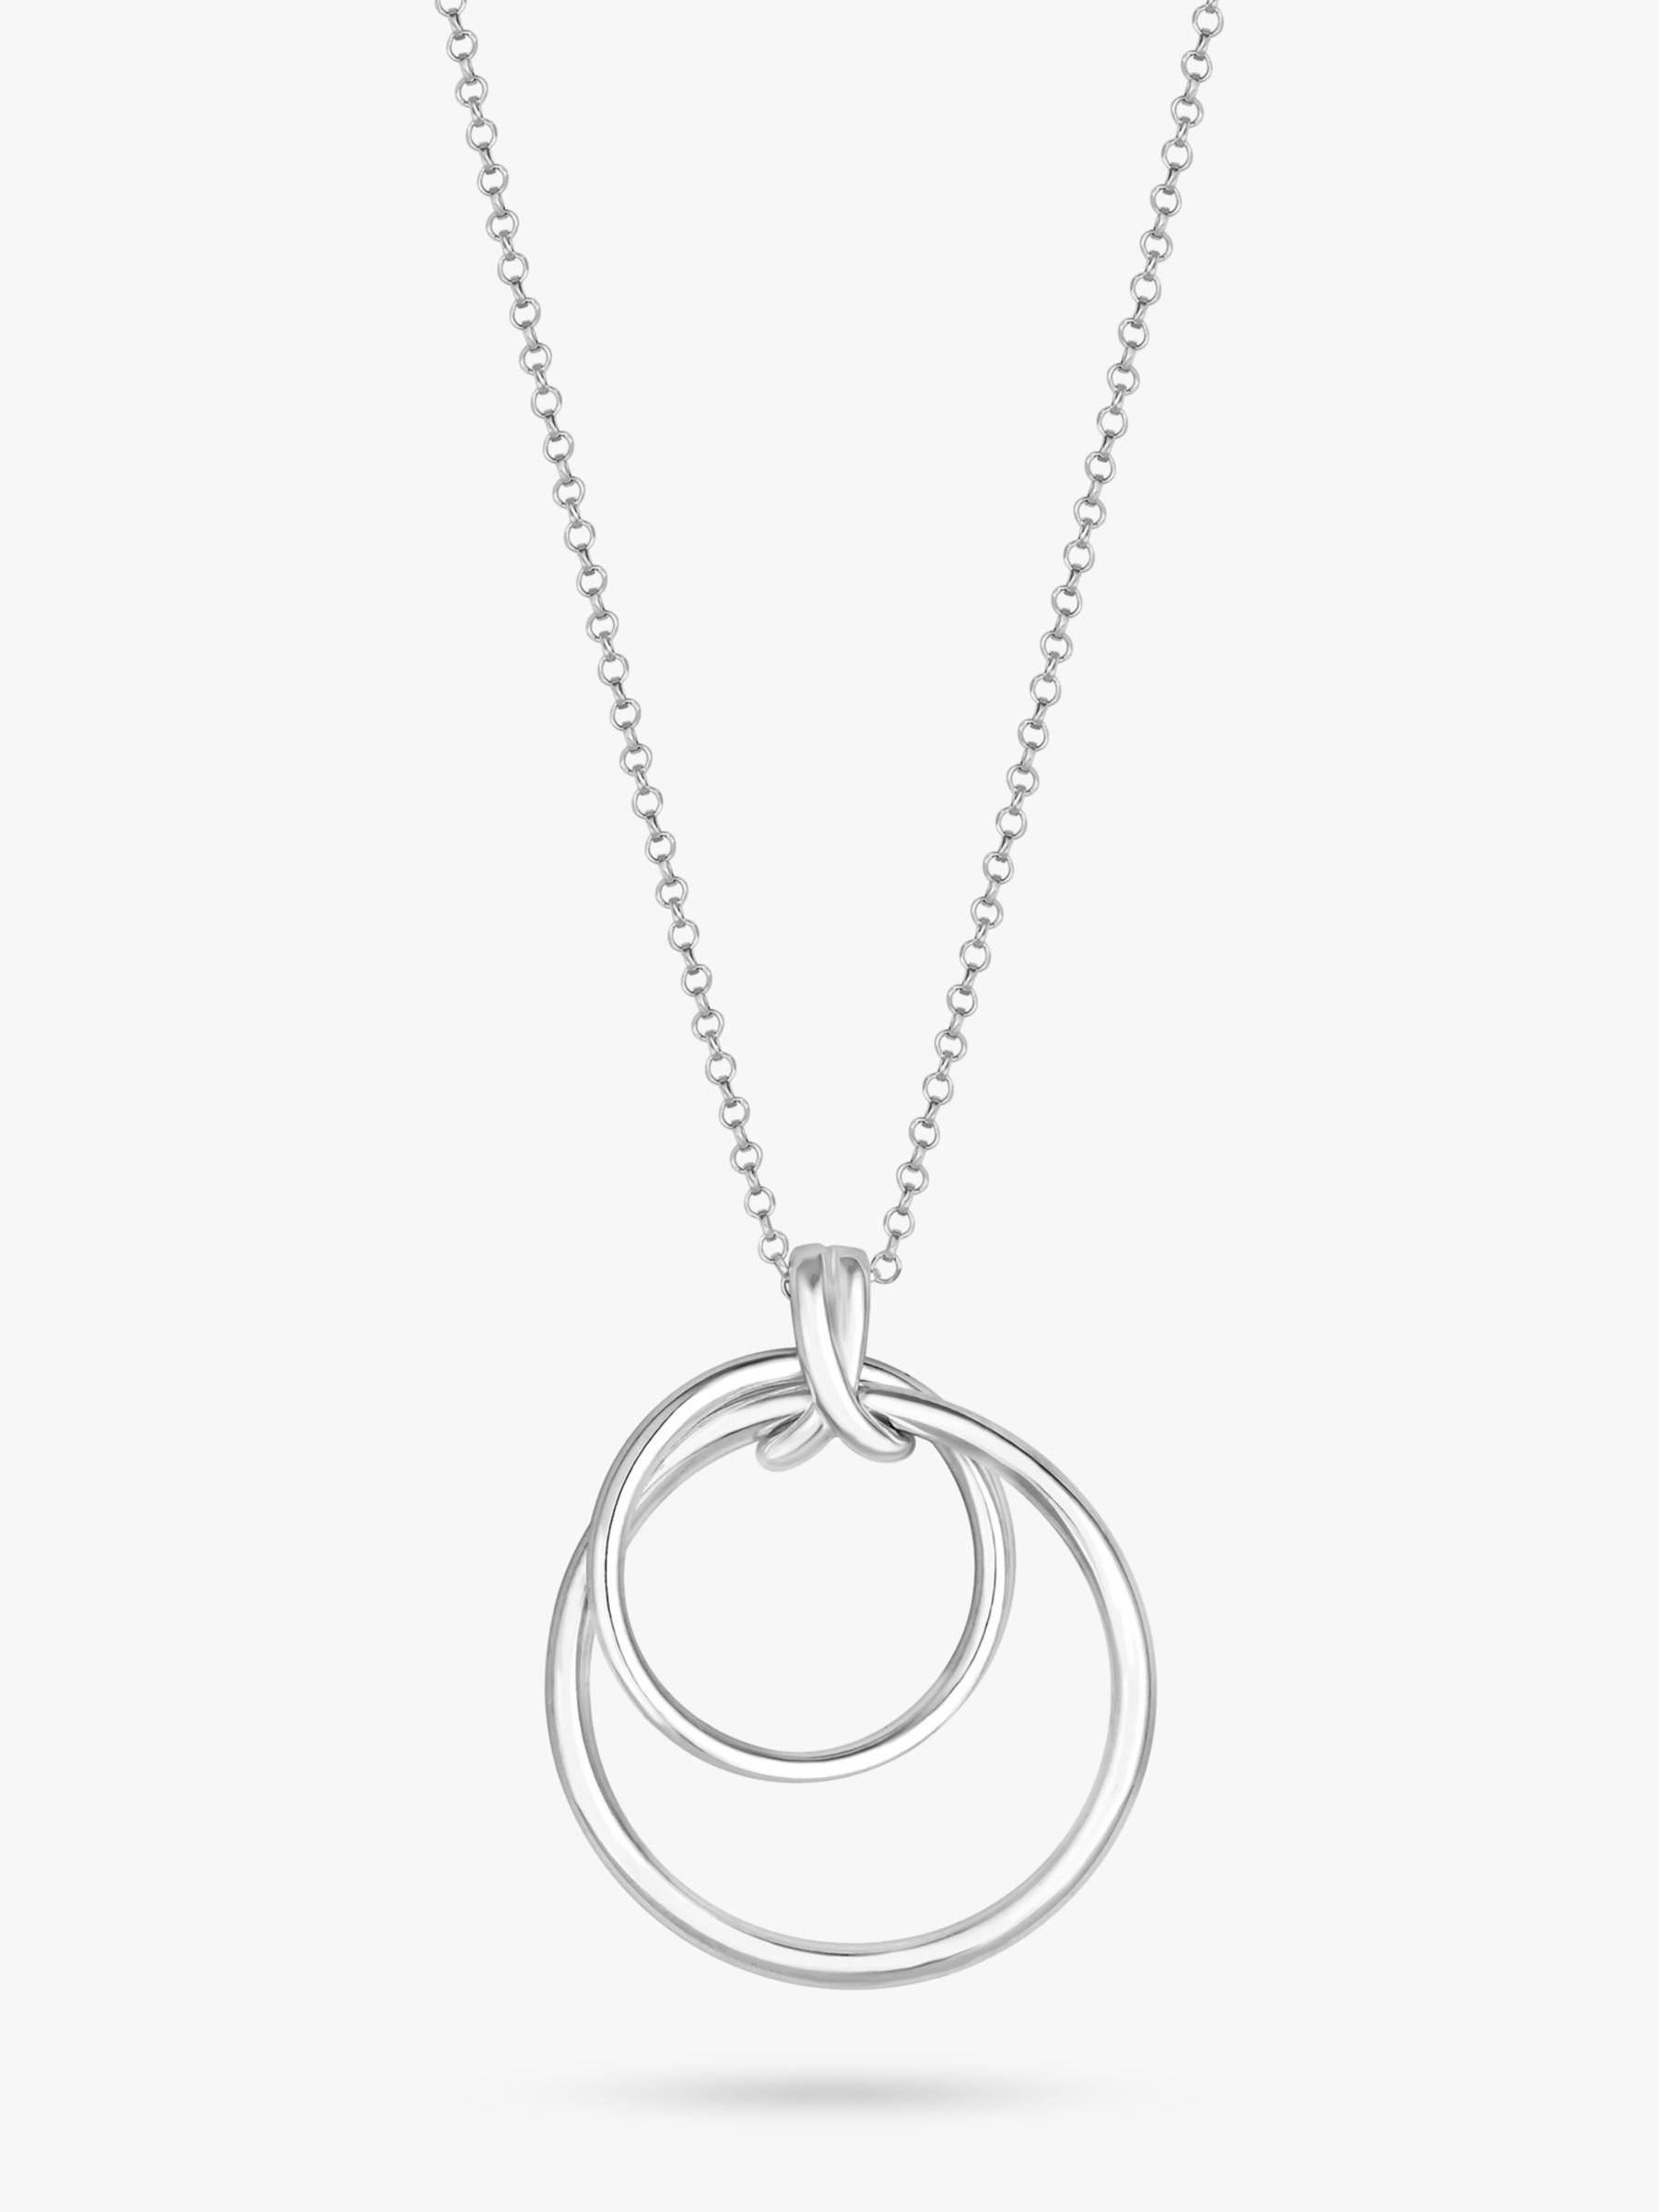 Silver Necklaces, Women's Silver Necklaces